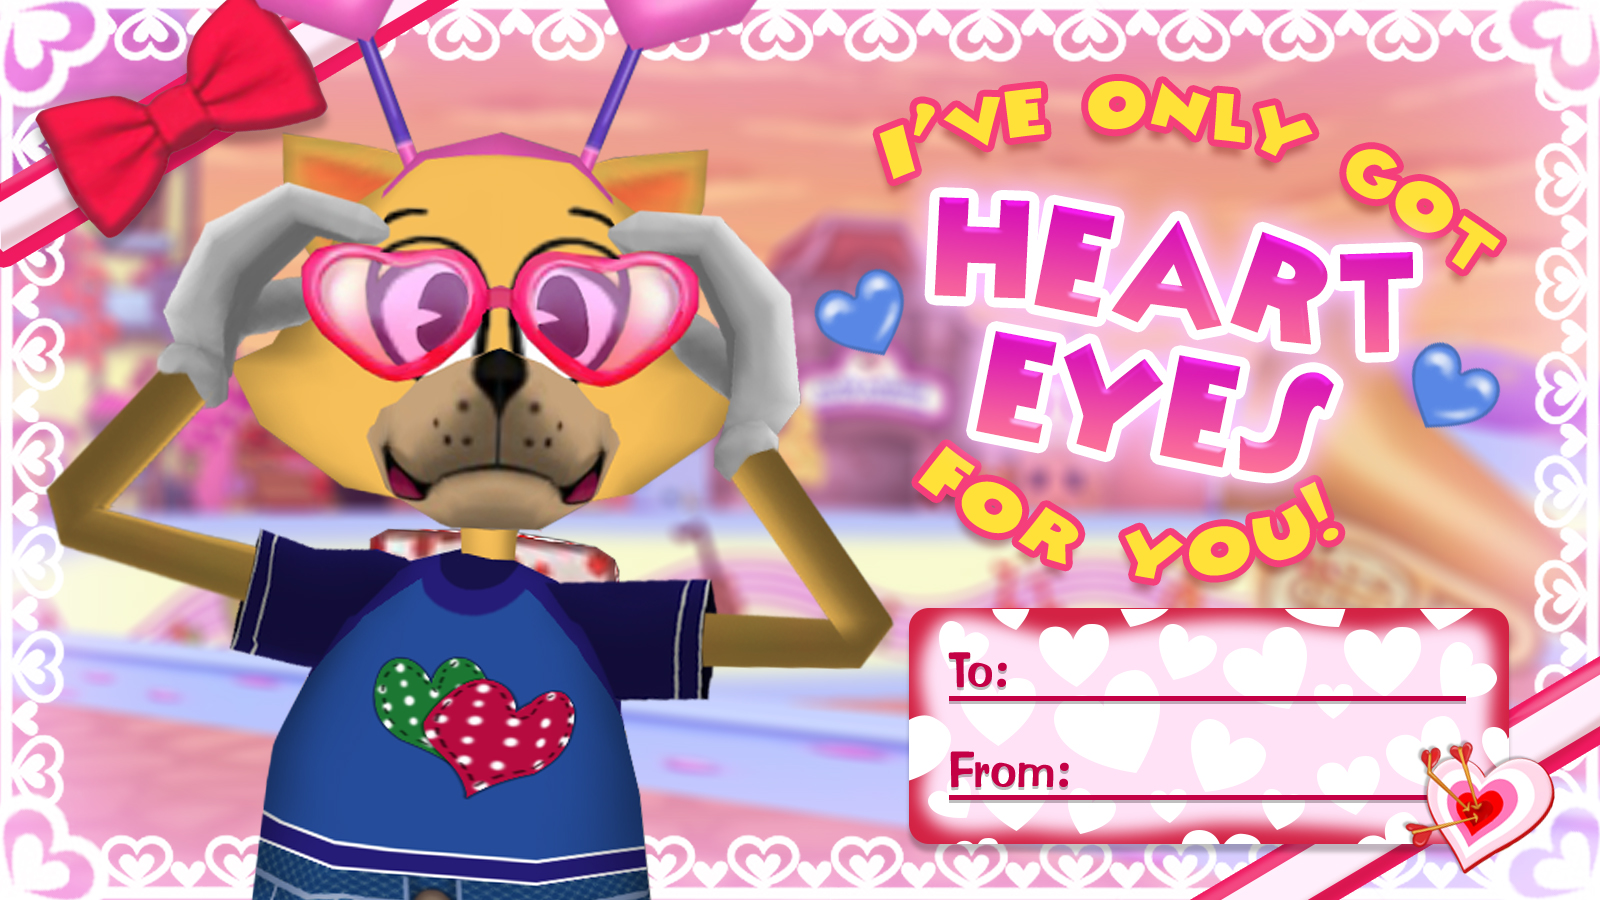 Cat Valentine - I've only got Heart Eyes for you!